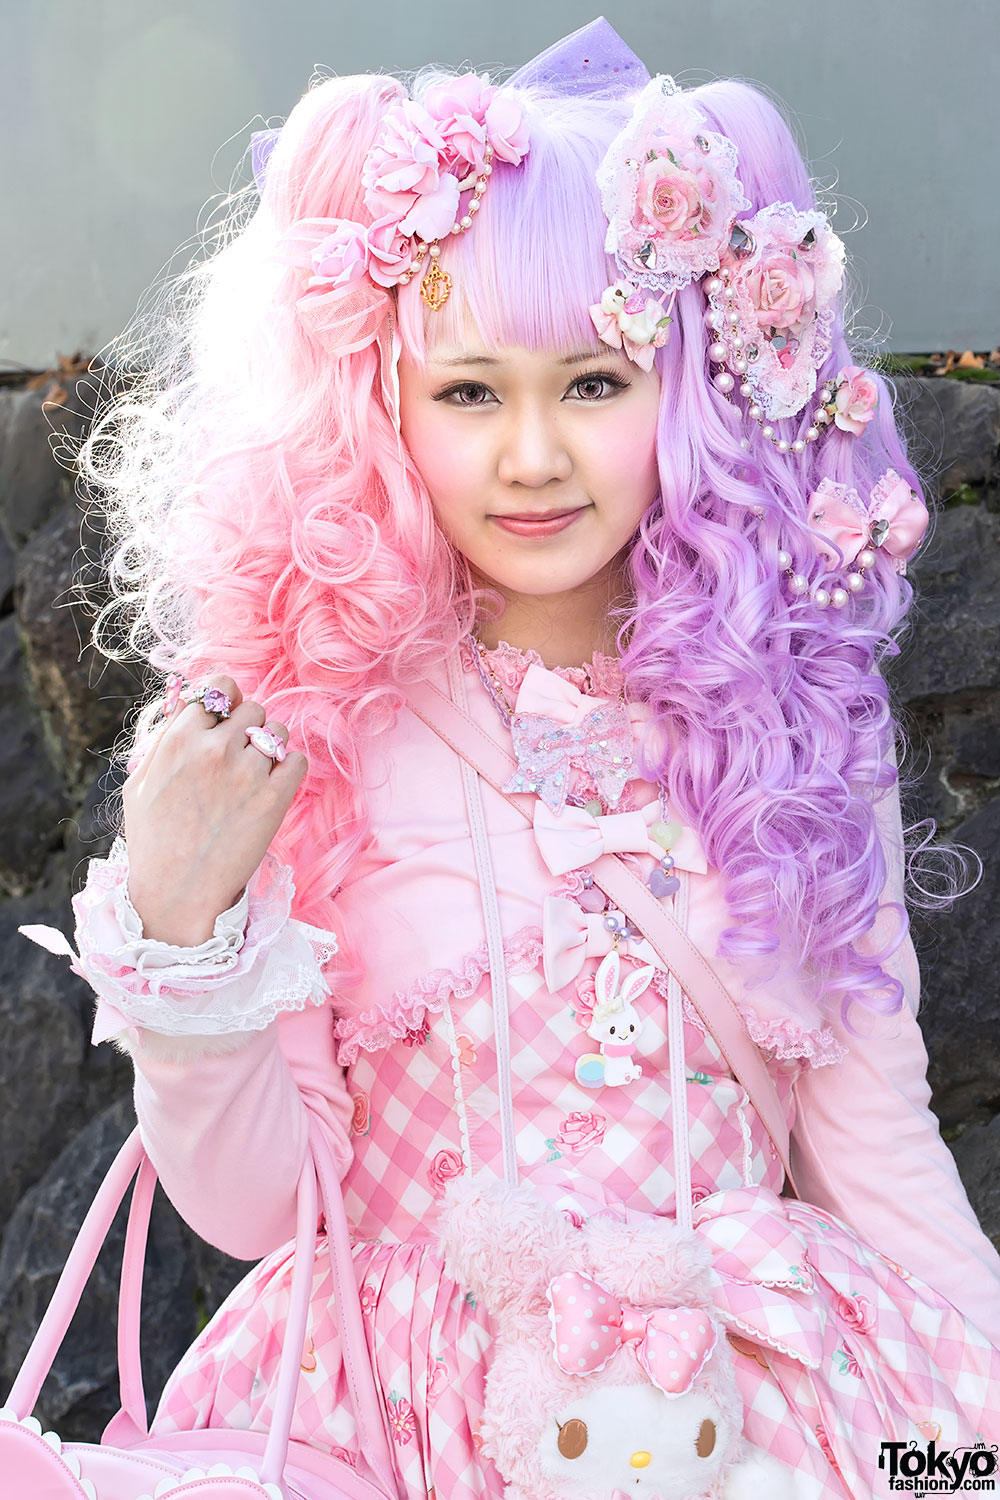 Angelic Pretty BTSSB Sweet Harajuku 2014 01 13 DSC7862